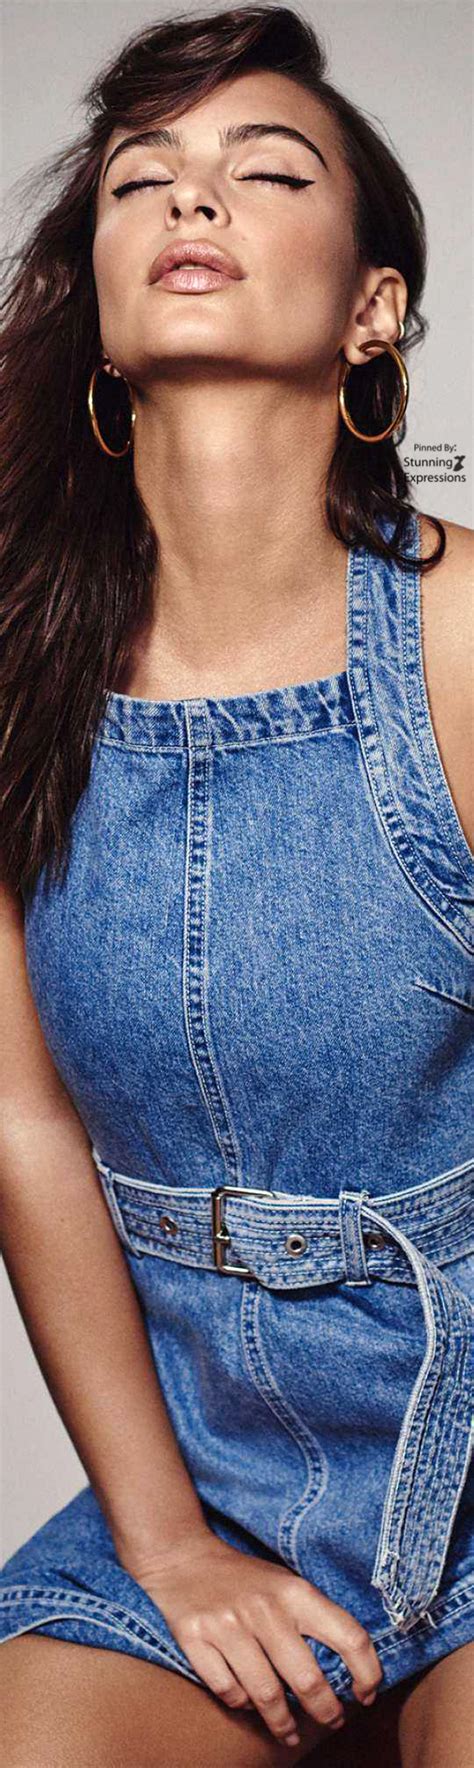 Emily Ratajkowski Dl1961 Jeans Spring 2018 Ad Campaign Stunning